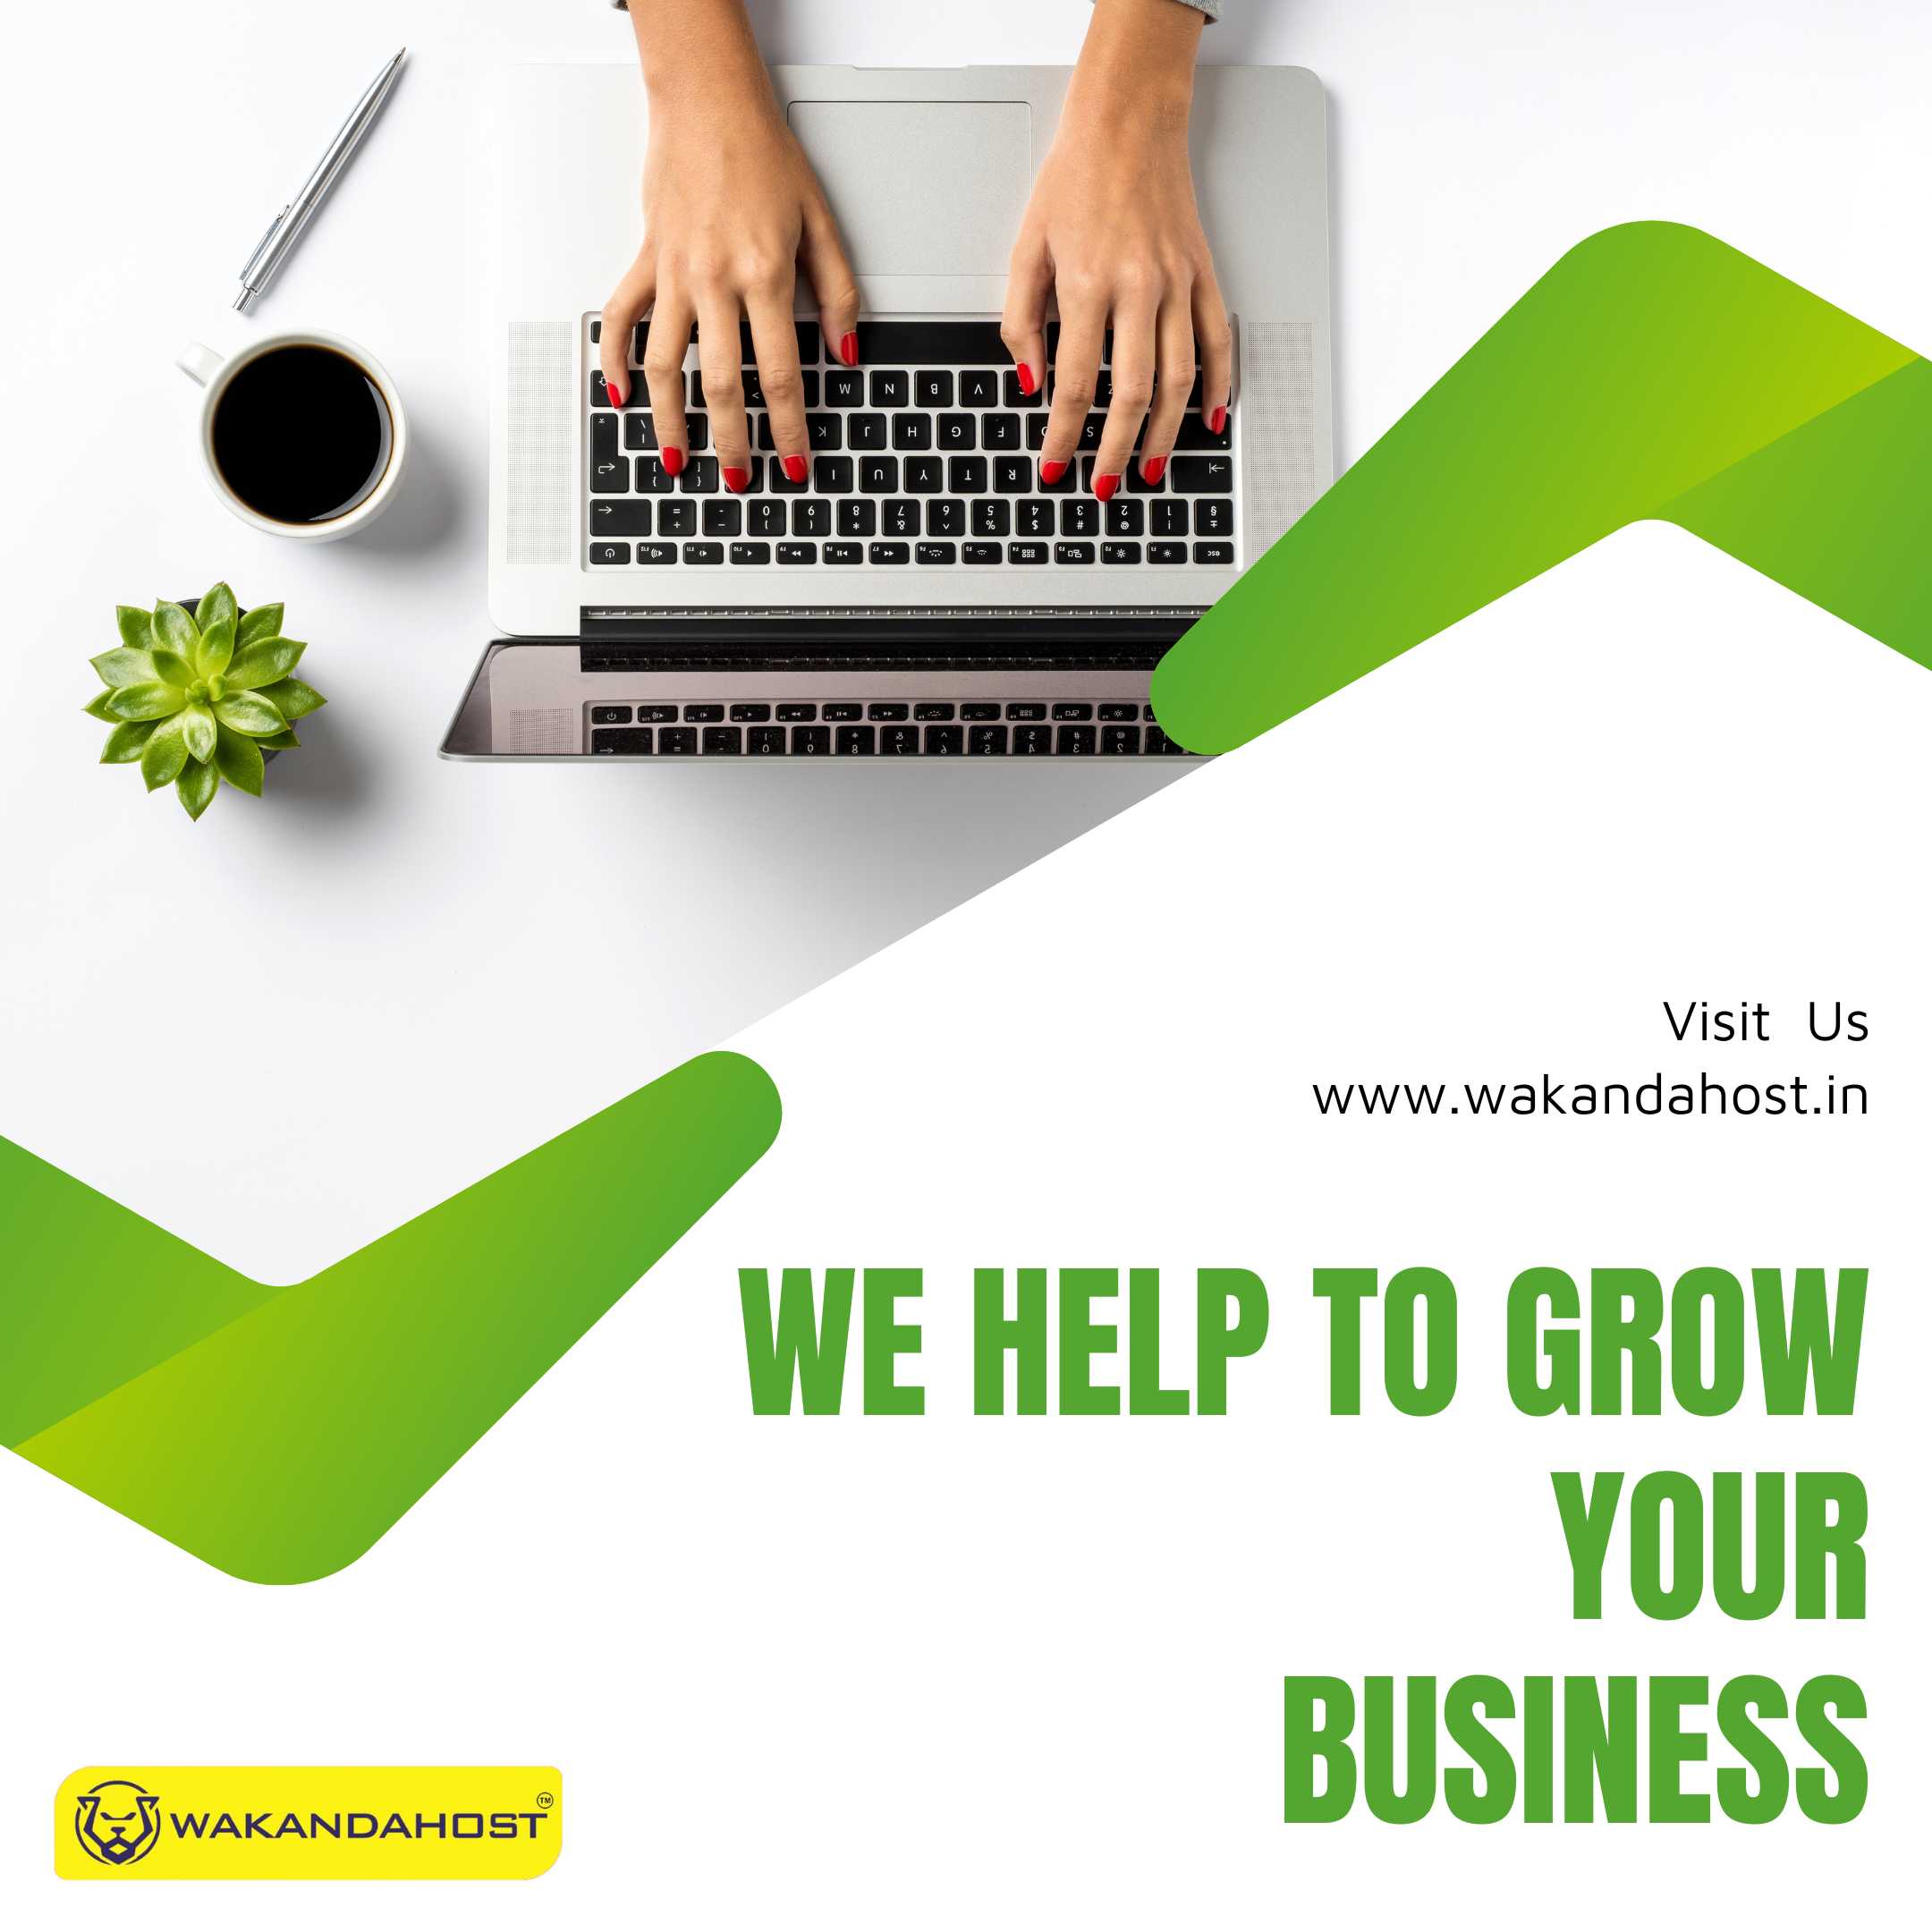 Visit Us
www.wakandahost.in

WE HELP T0 GROW
YOUR
{J wakanparosT BUSINESS